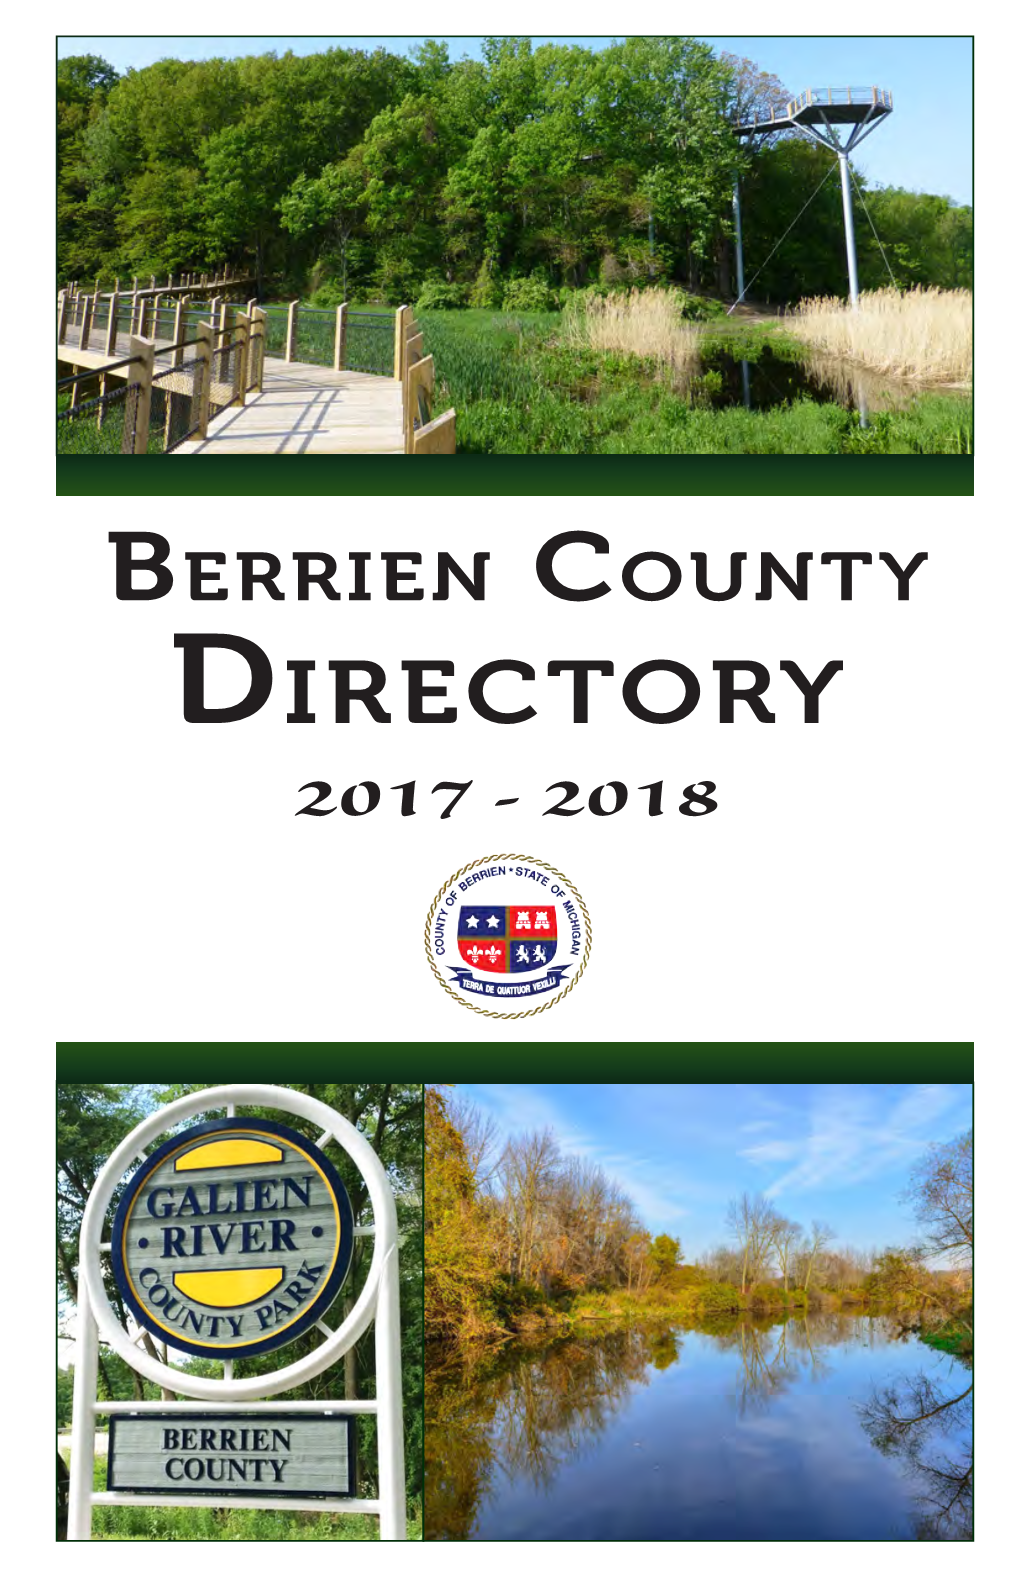 Berrien County Directory 2017 - 2018 Galien River County Park